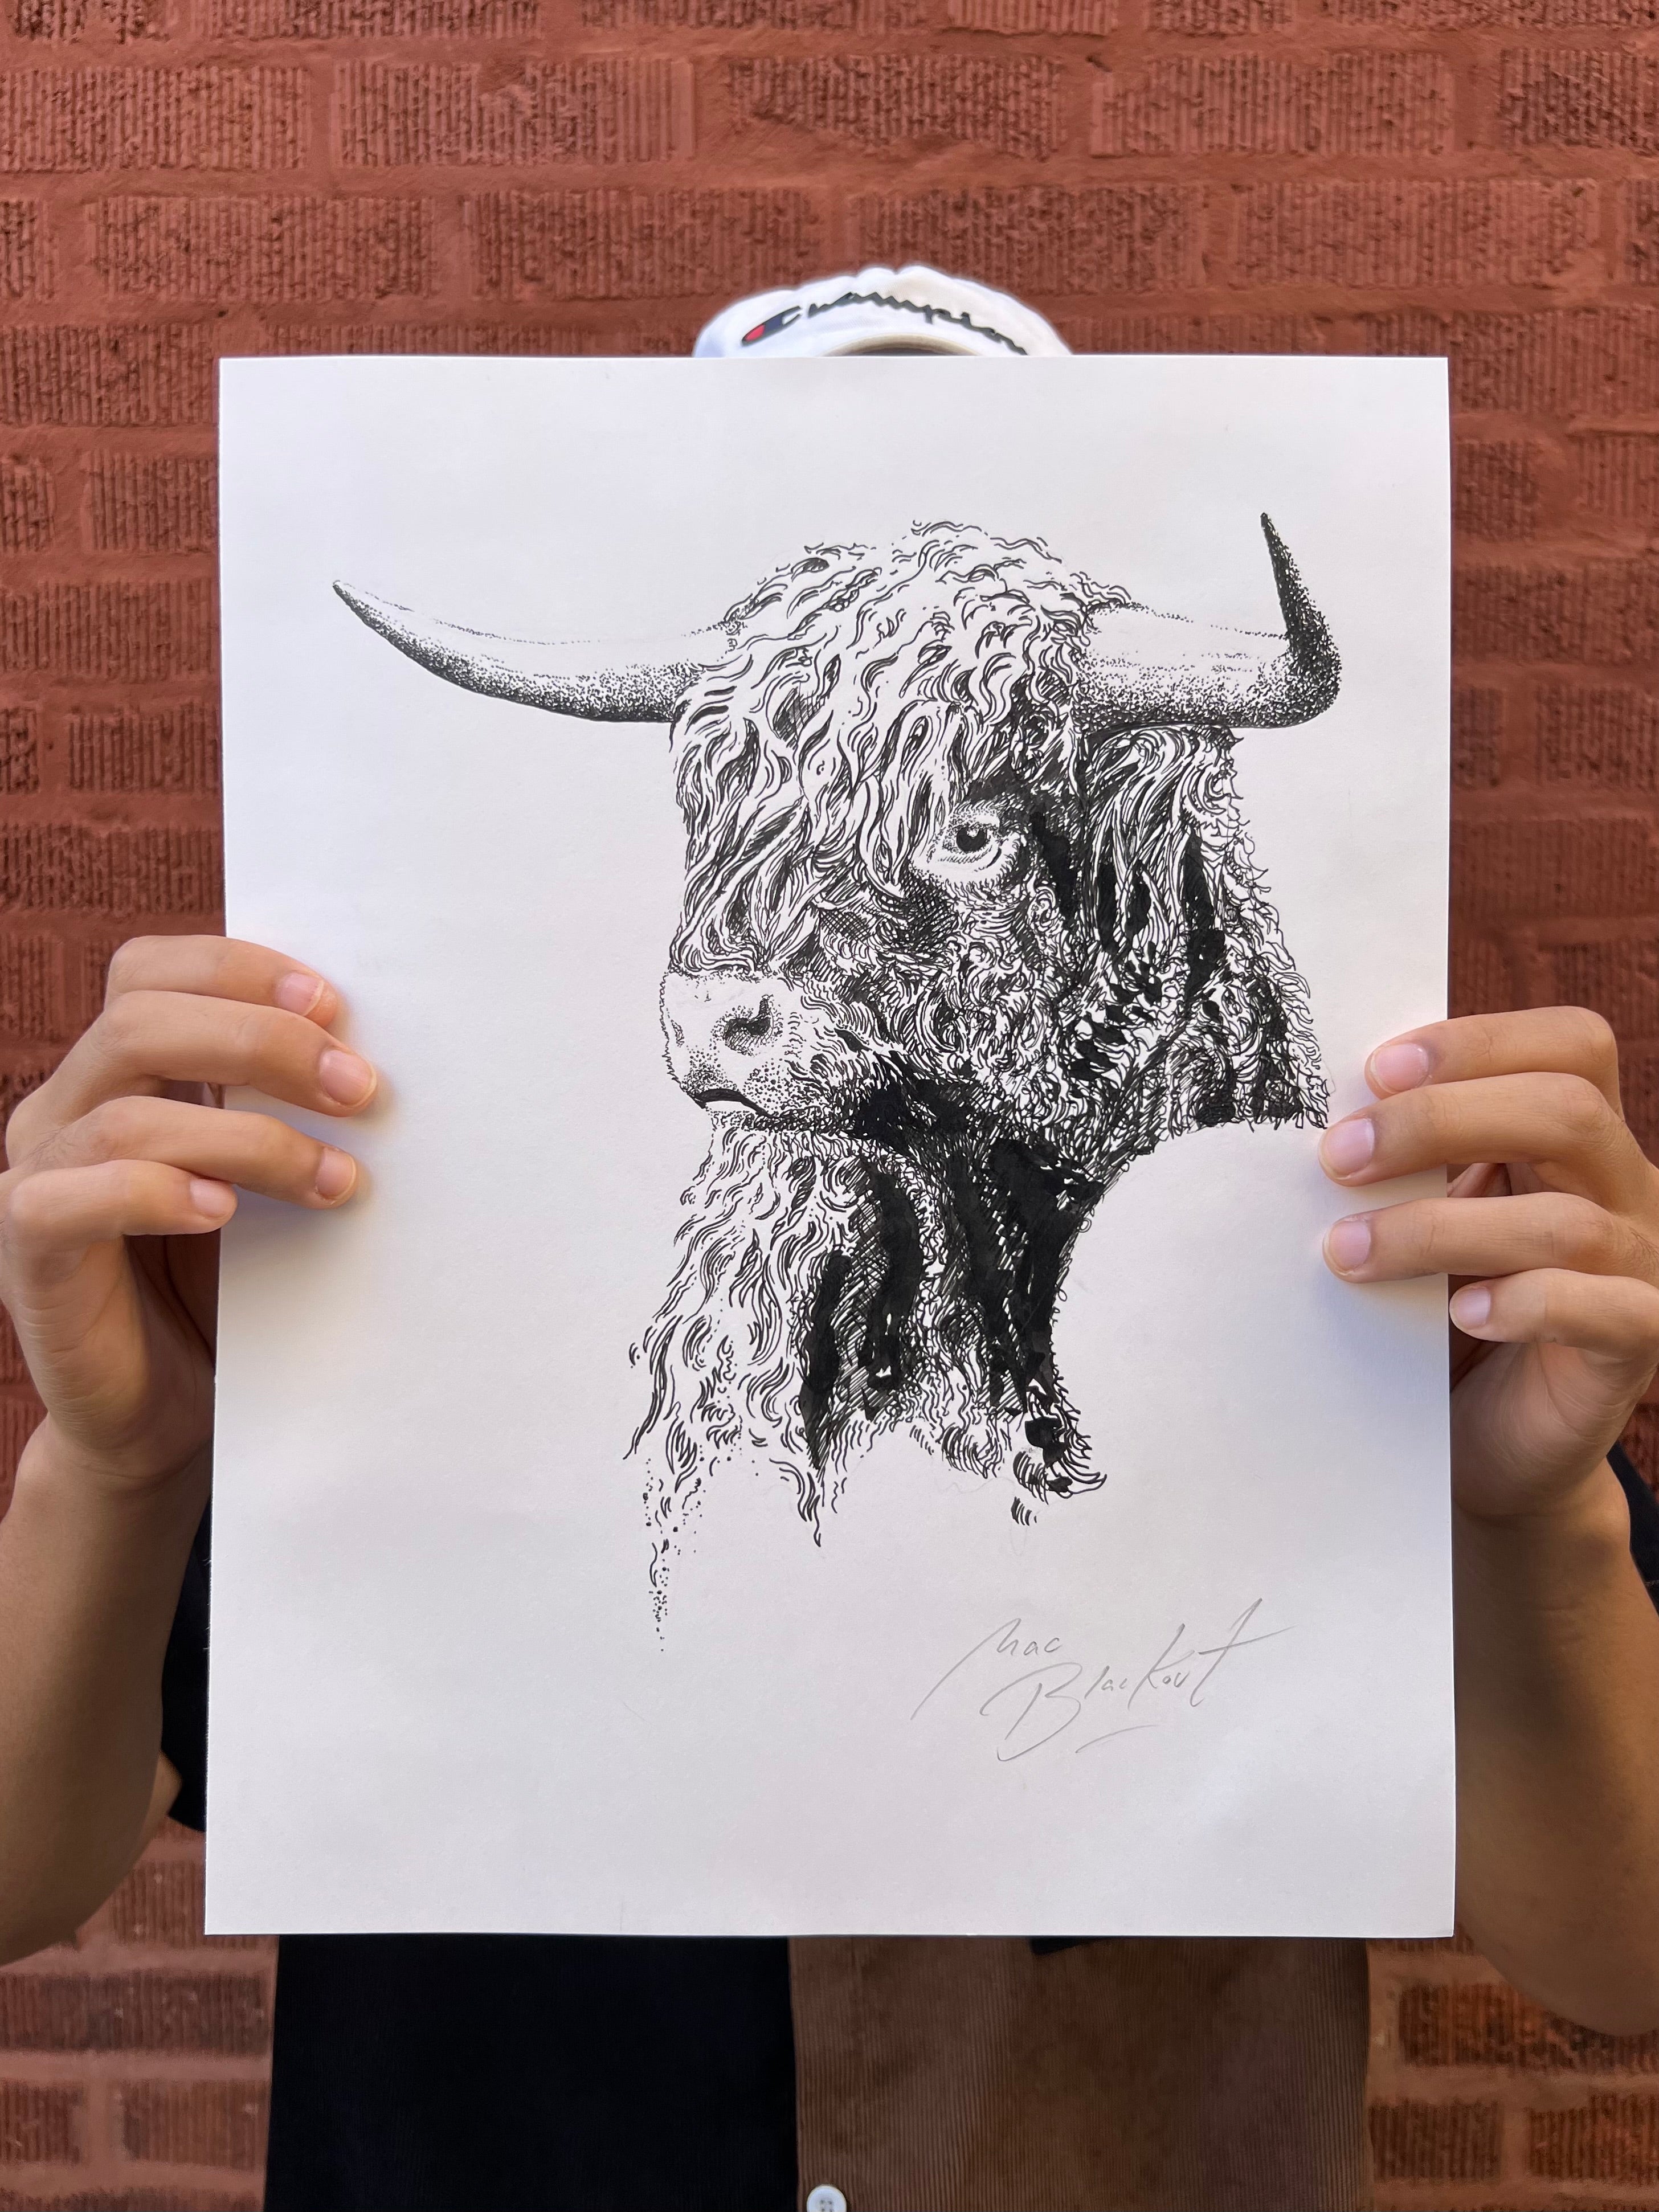 "Taurus: The Bull" by Mac Blackout